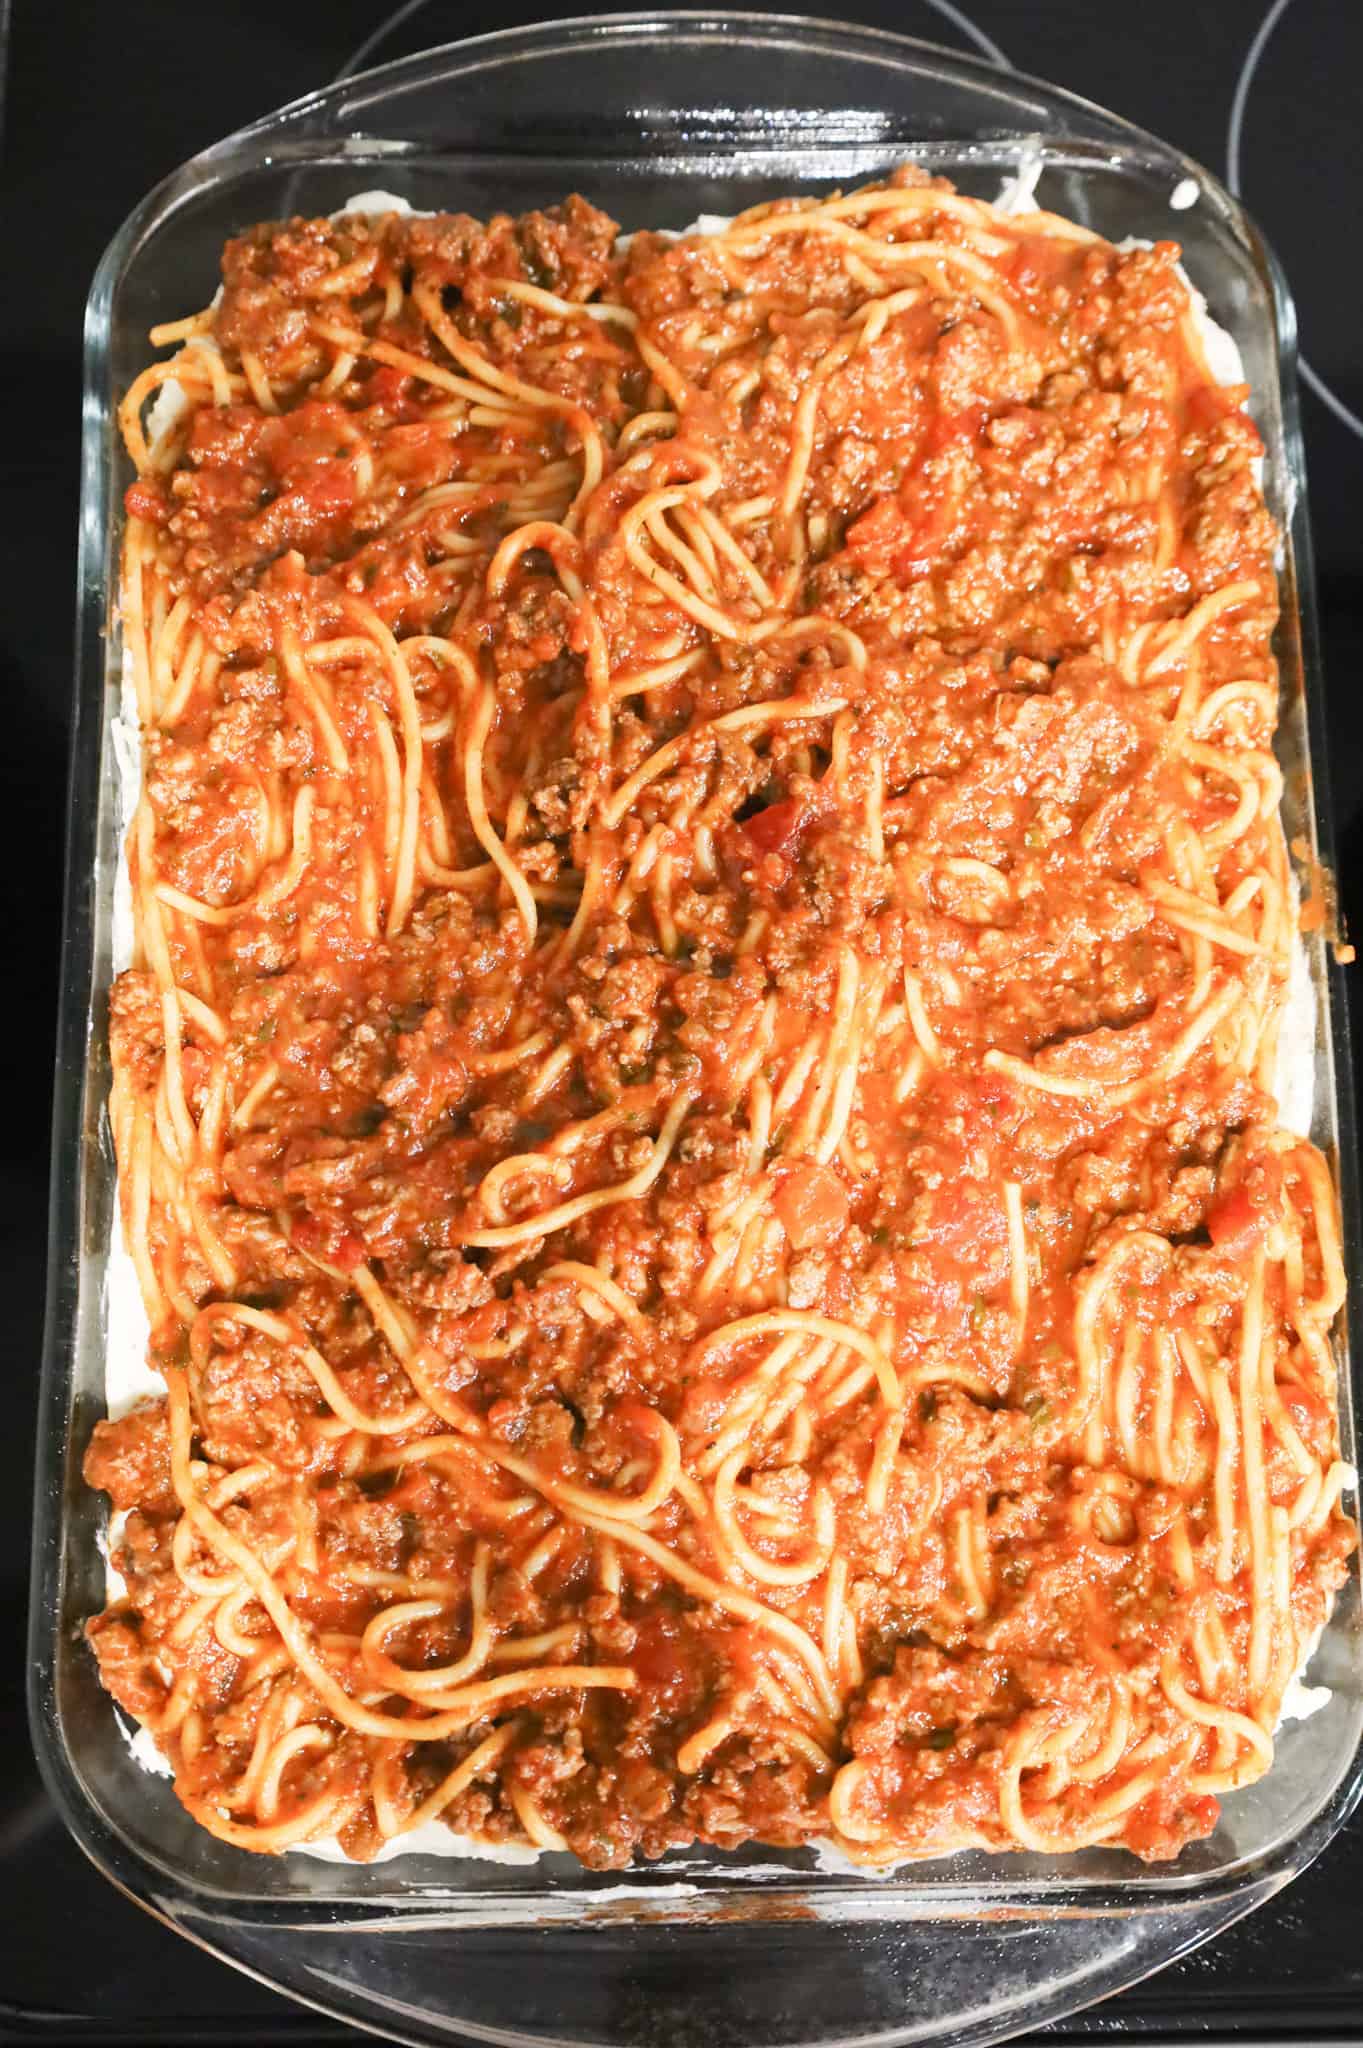 spaghetti mixture in a baking dish